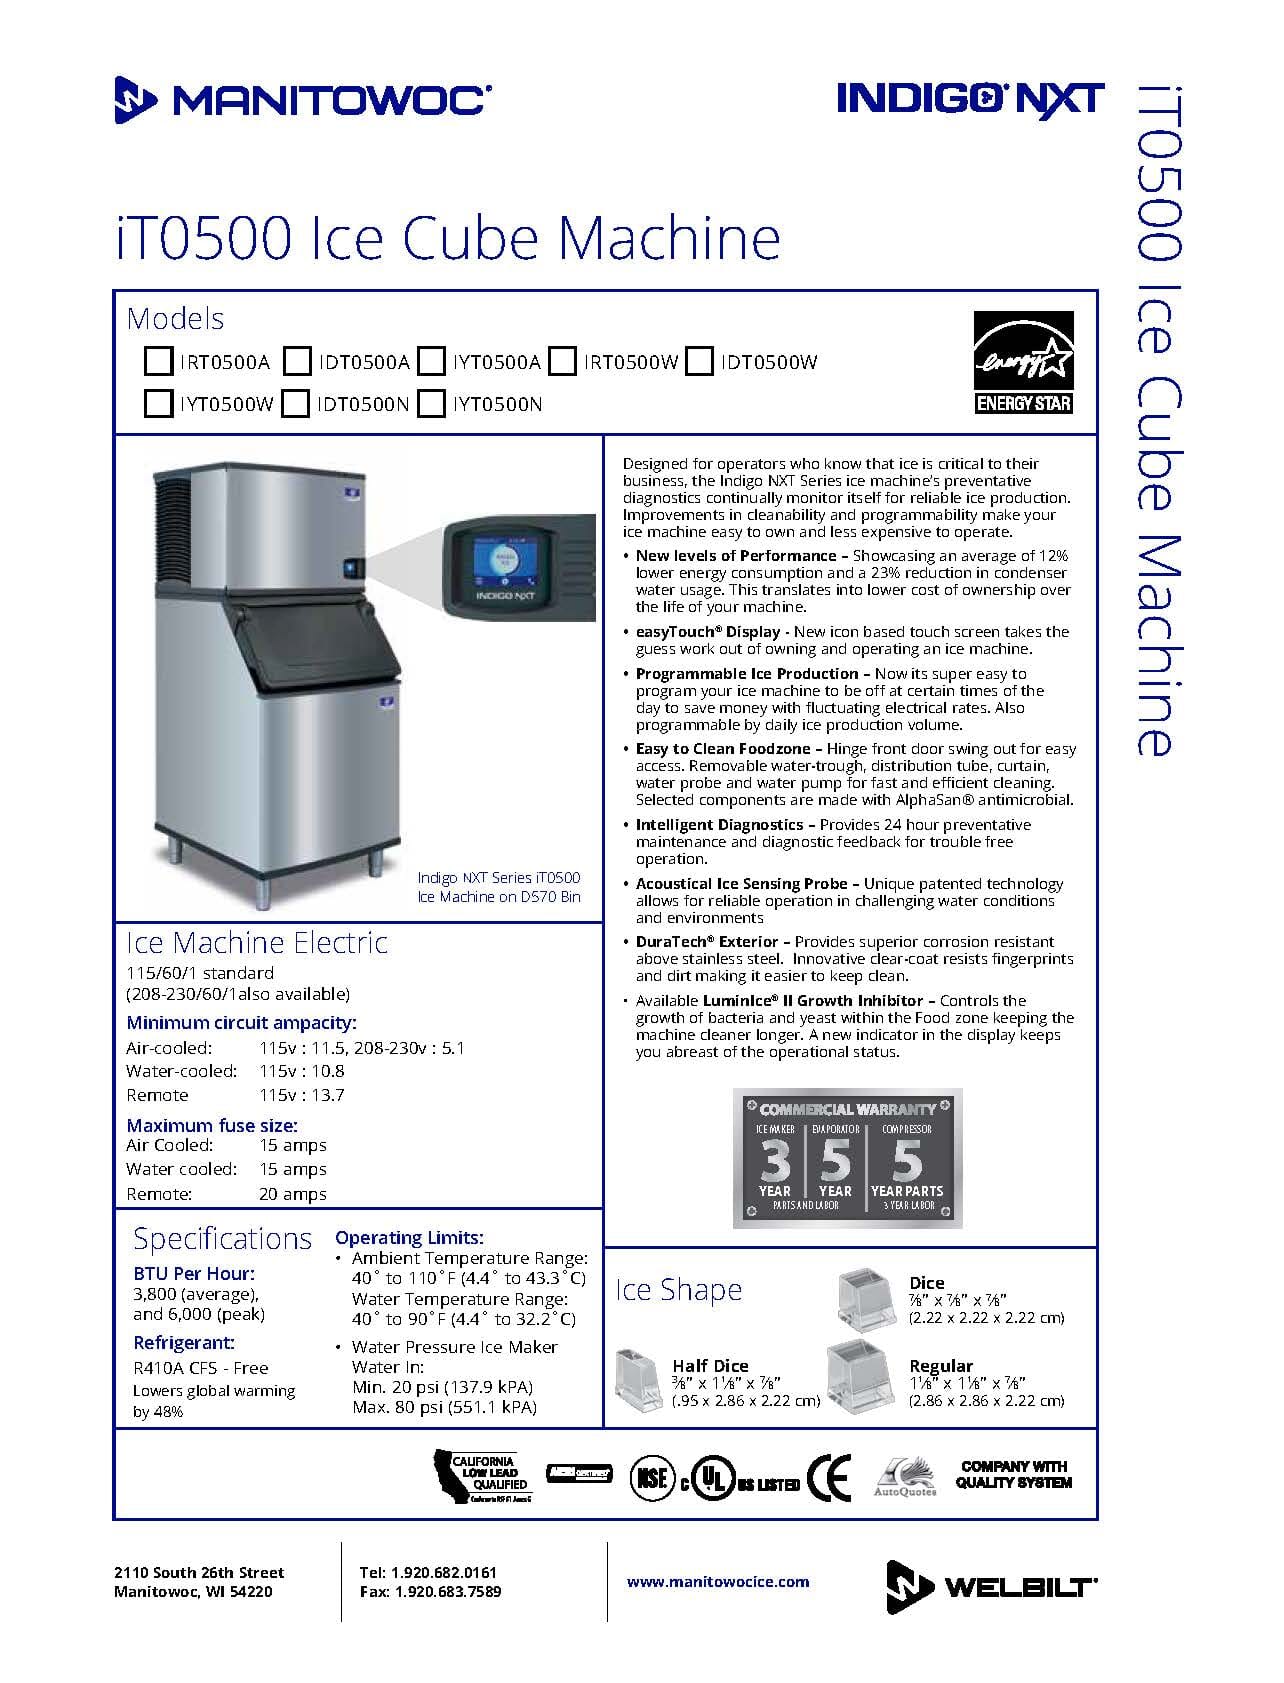 https://cdn.shopify.com/s/files/1/0680/7207/9679/files/manitowoc-iyt0500a-indigo-nxt-30-550lb-air-cooled-half-dice-ice-machine-manitowoc-439309.jpg?v=1701102174&width=1284